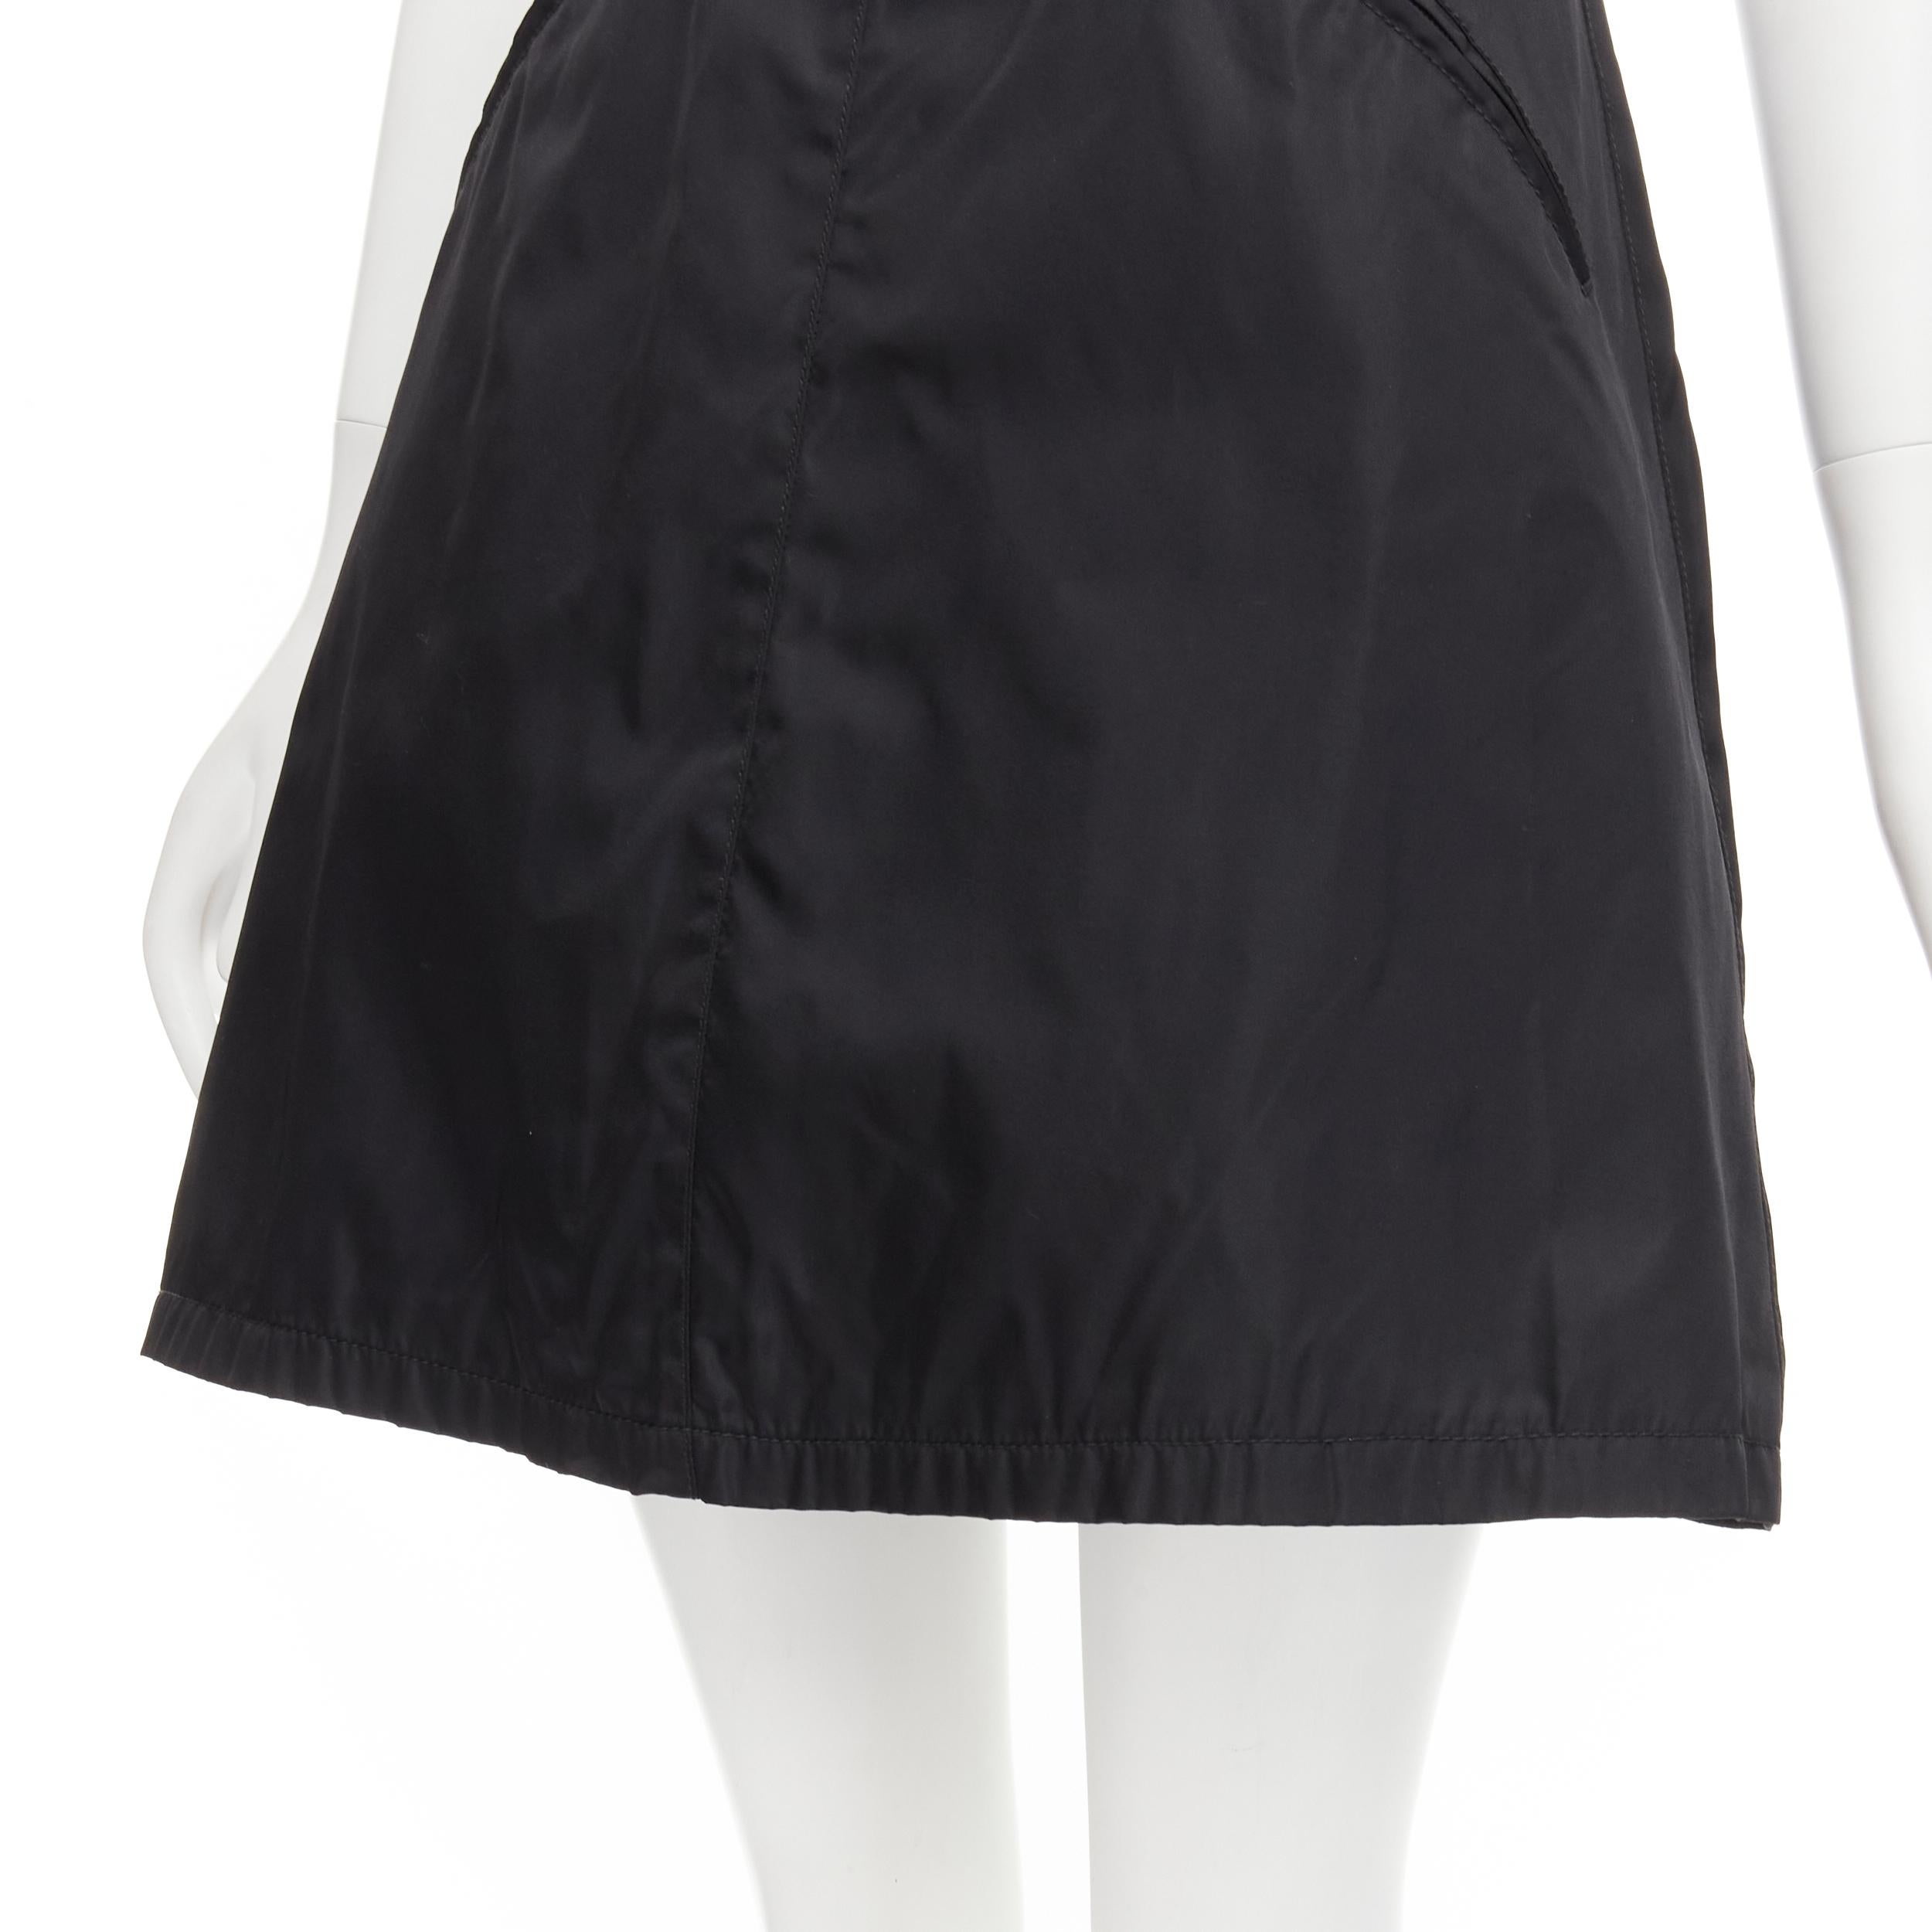 Women's PRADA minimal black metal buckle belted nylon A-line skirt dress S